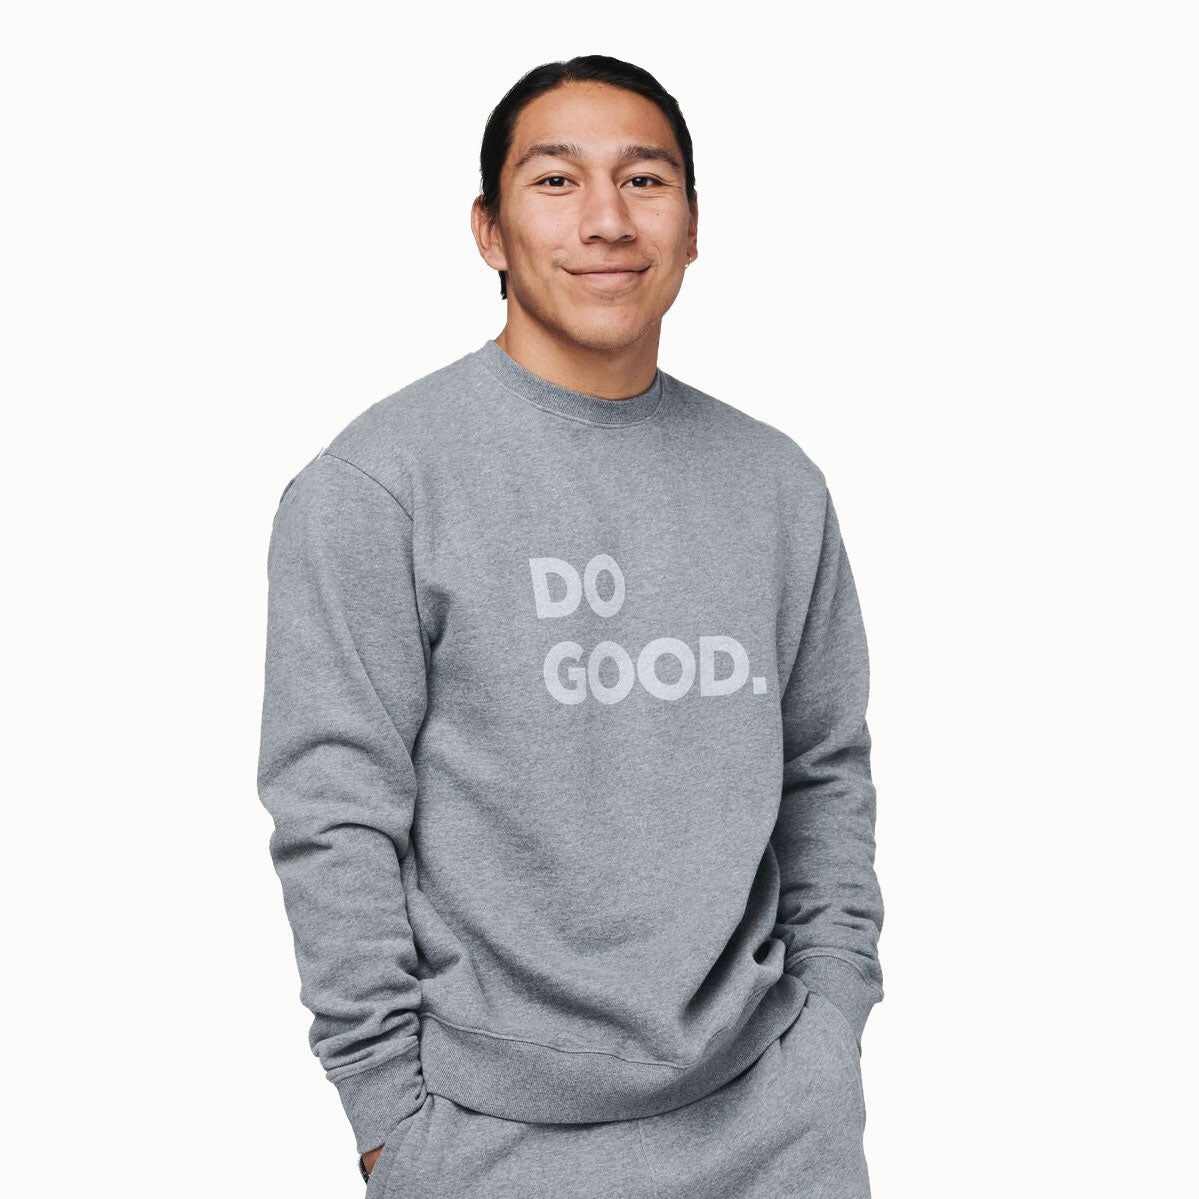 Cotopaxi Do Good Crew Sweatshirt - MENS コトパクシ ドゥグッド クルー スウェットシャツ メンズ